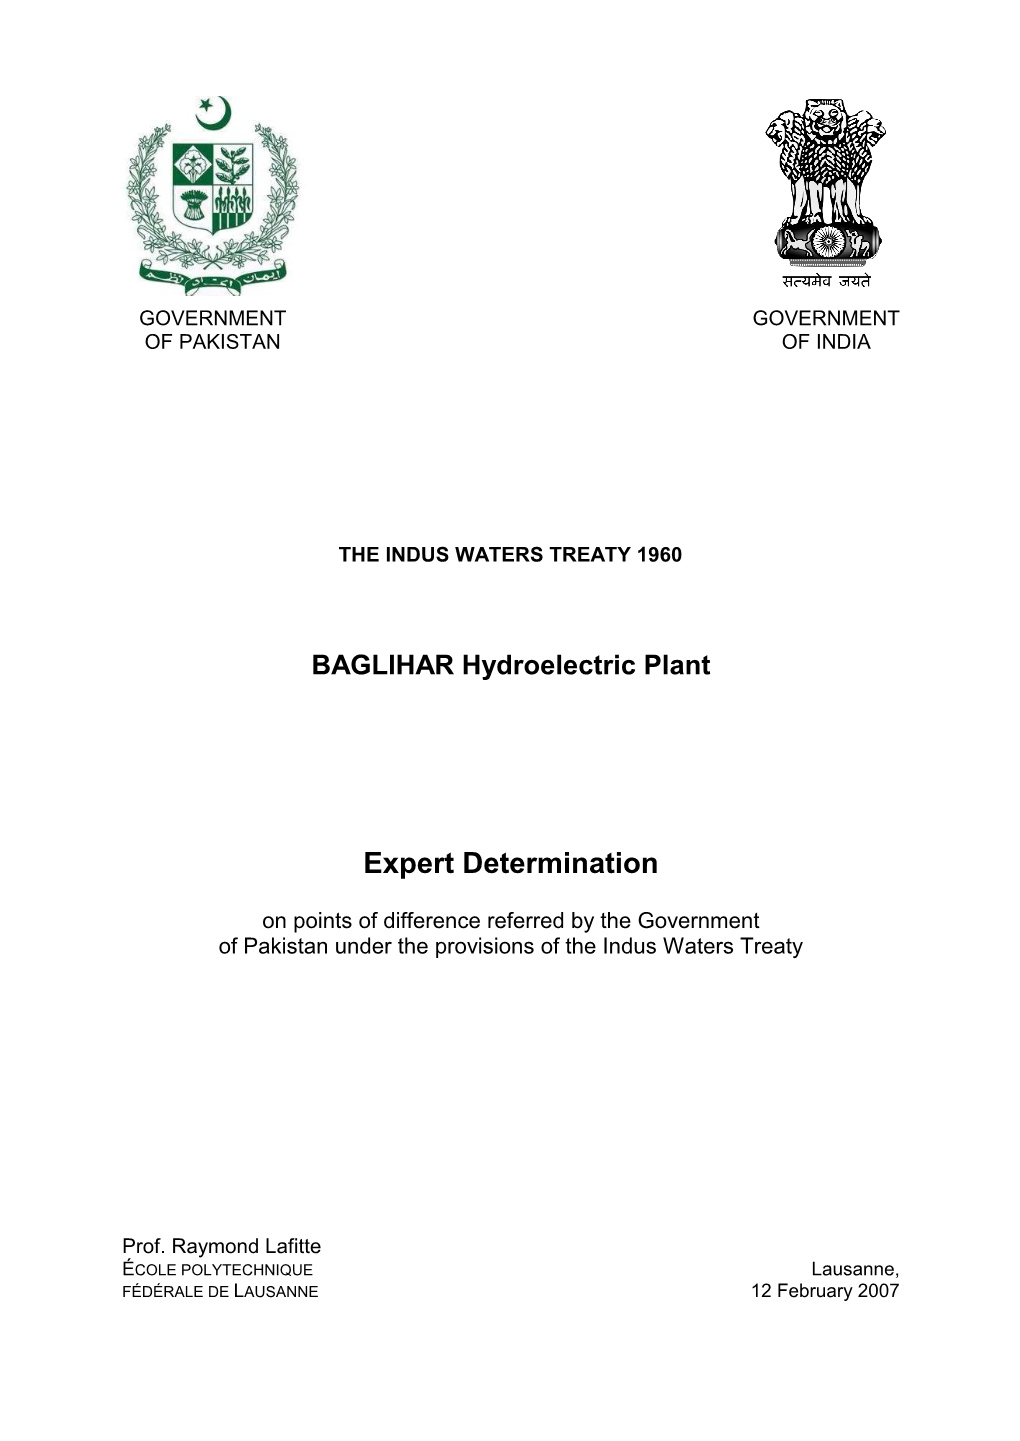 BAGLIHAR Hydroelectric Plant